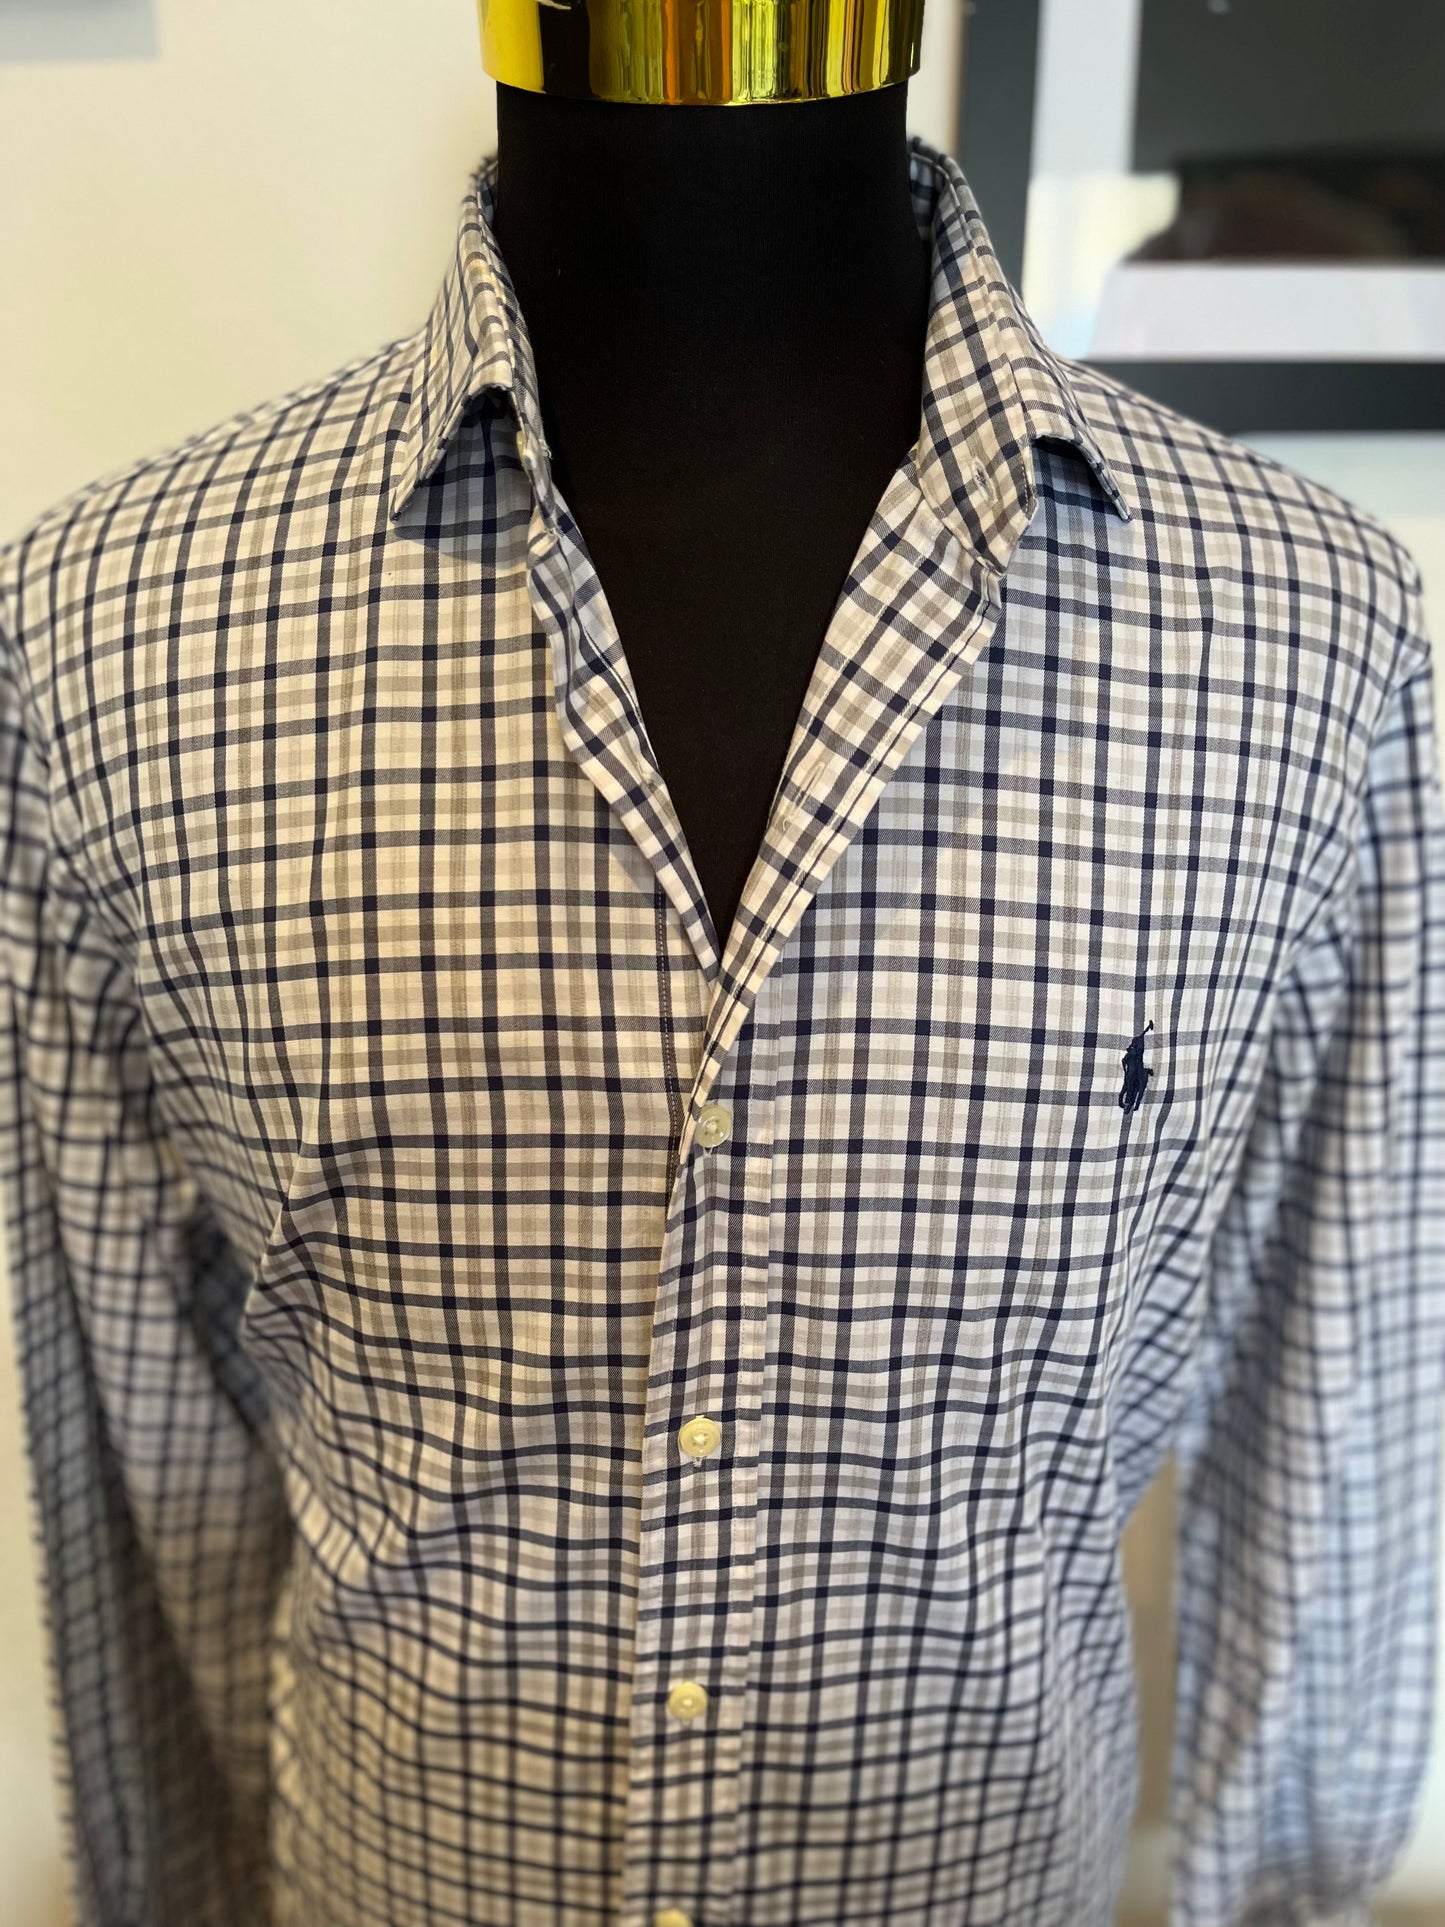 Ralph Lauren 100% Cotton White Blue Check Shirt Size Large Classic Fit Performance